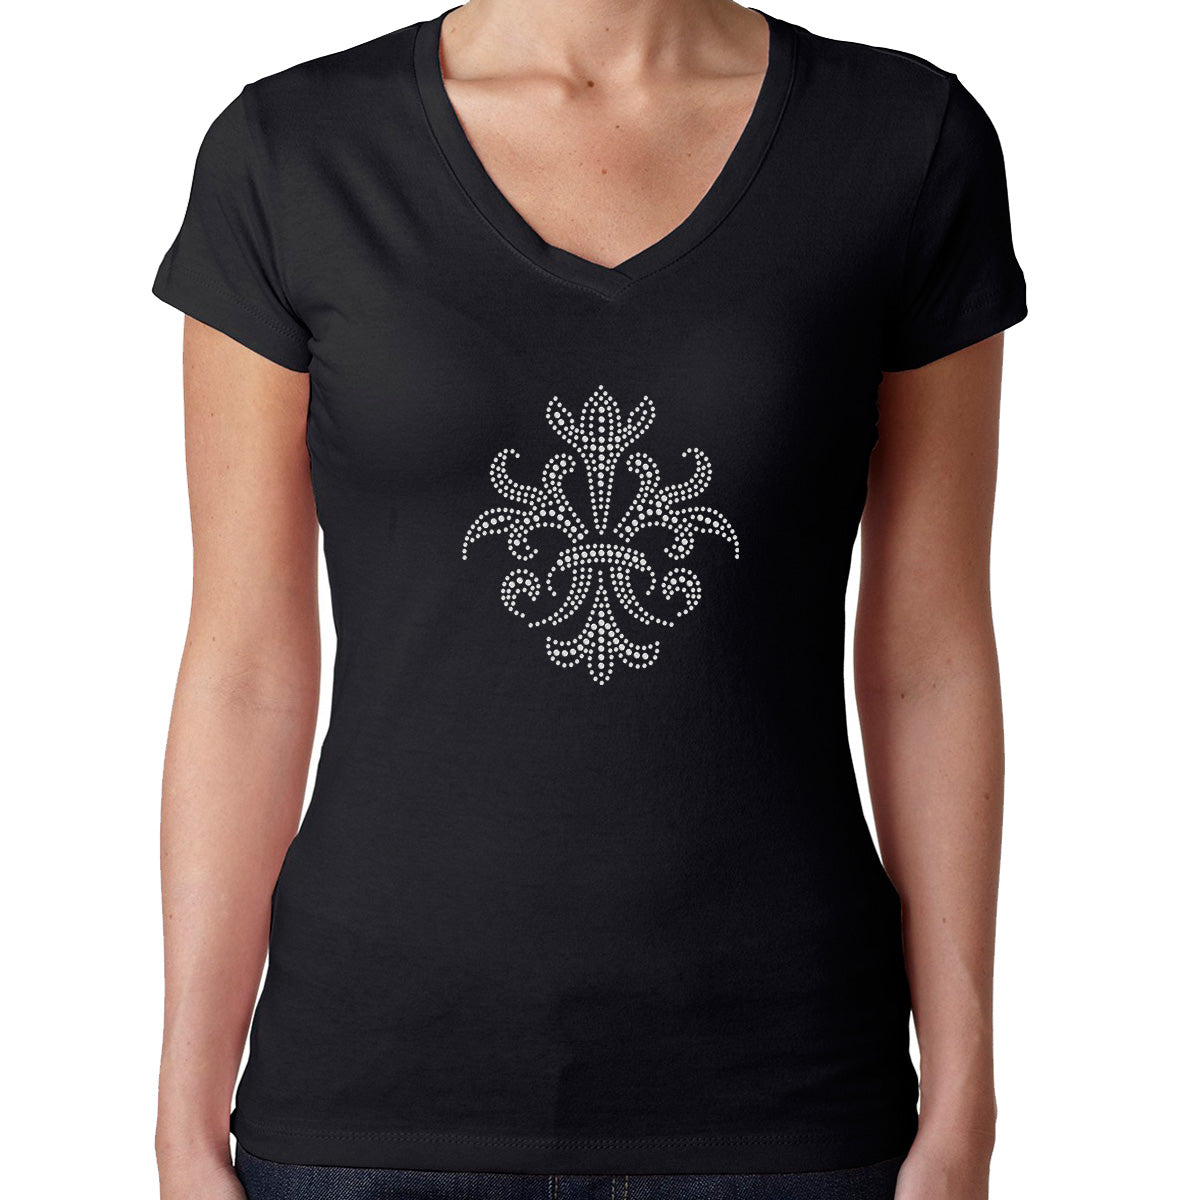 Womens T-Shirt Rhinestone Bling Black Fitted Tee Fleur de Lis Tribal Crystal